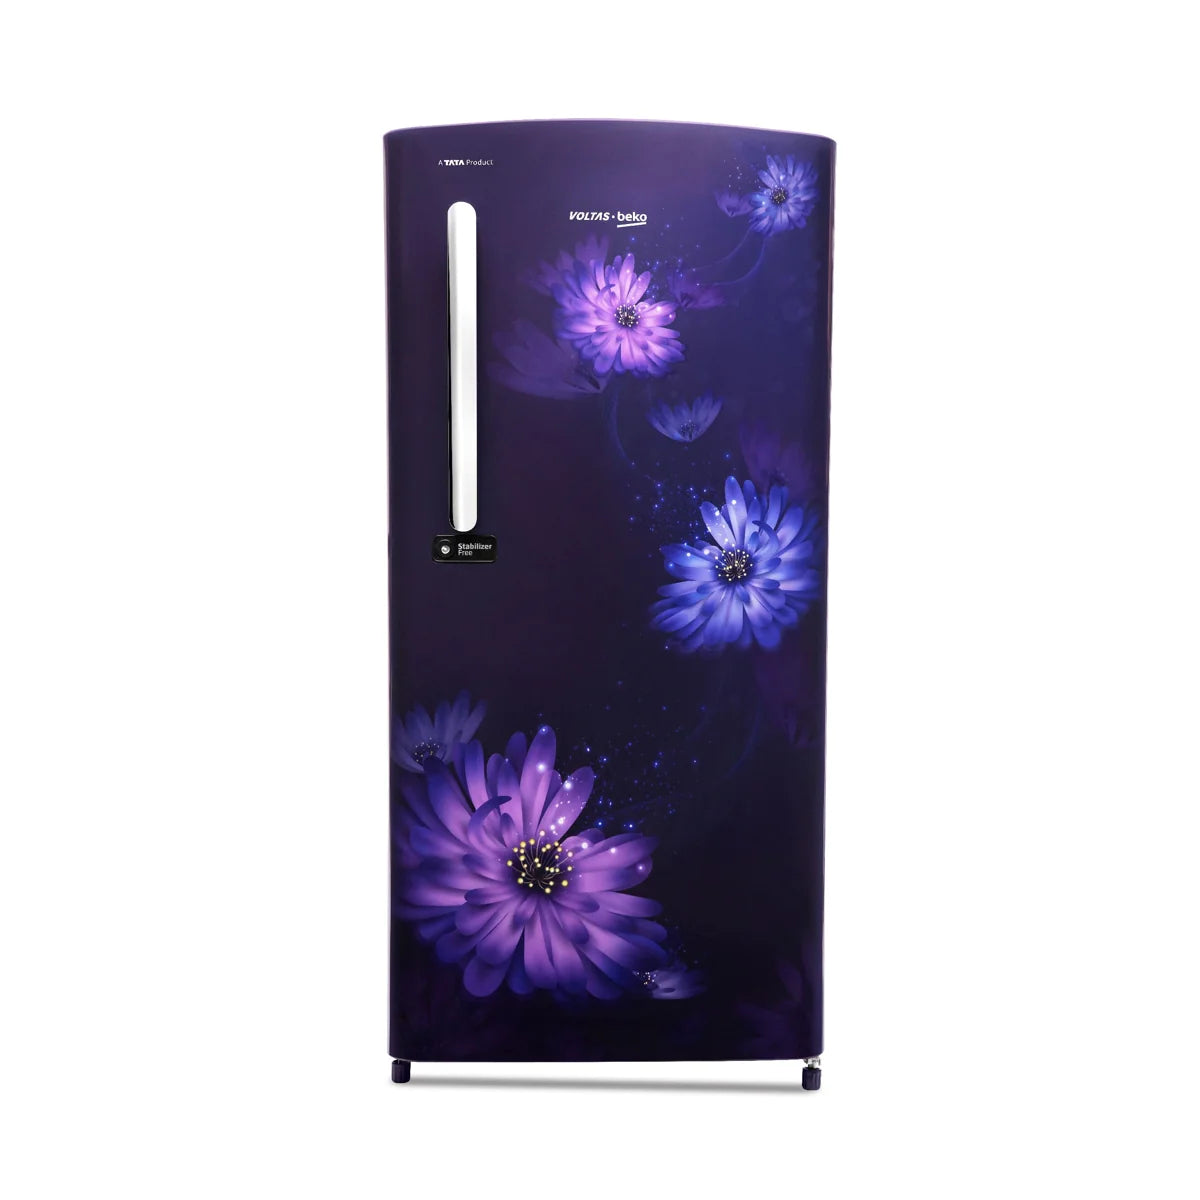 Voltas Beko by A Tata Product 185 L Direct Cool Single Door 3 Star Refrigerator  (Dahlia Blue, RDC220C